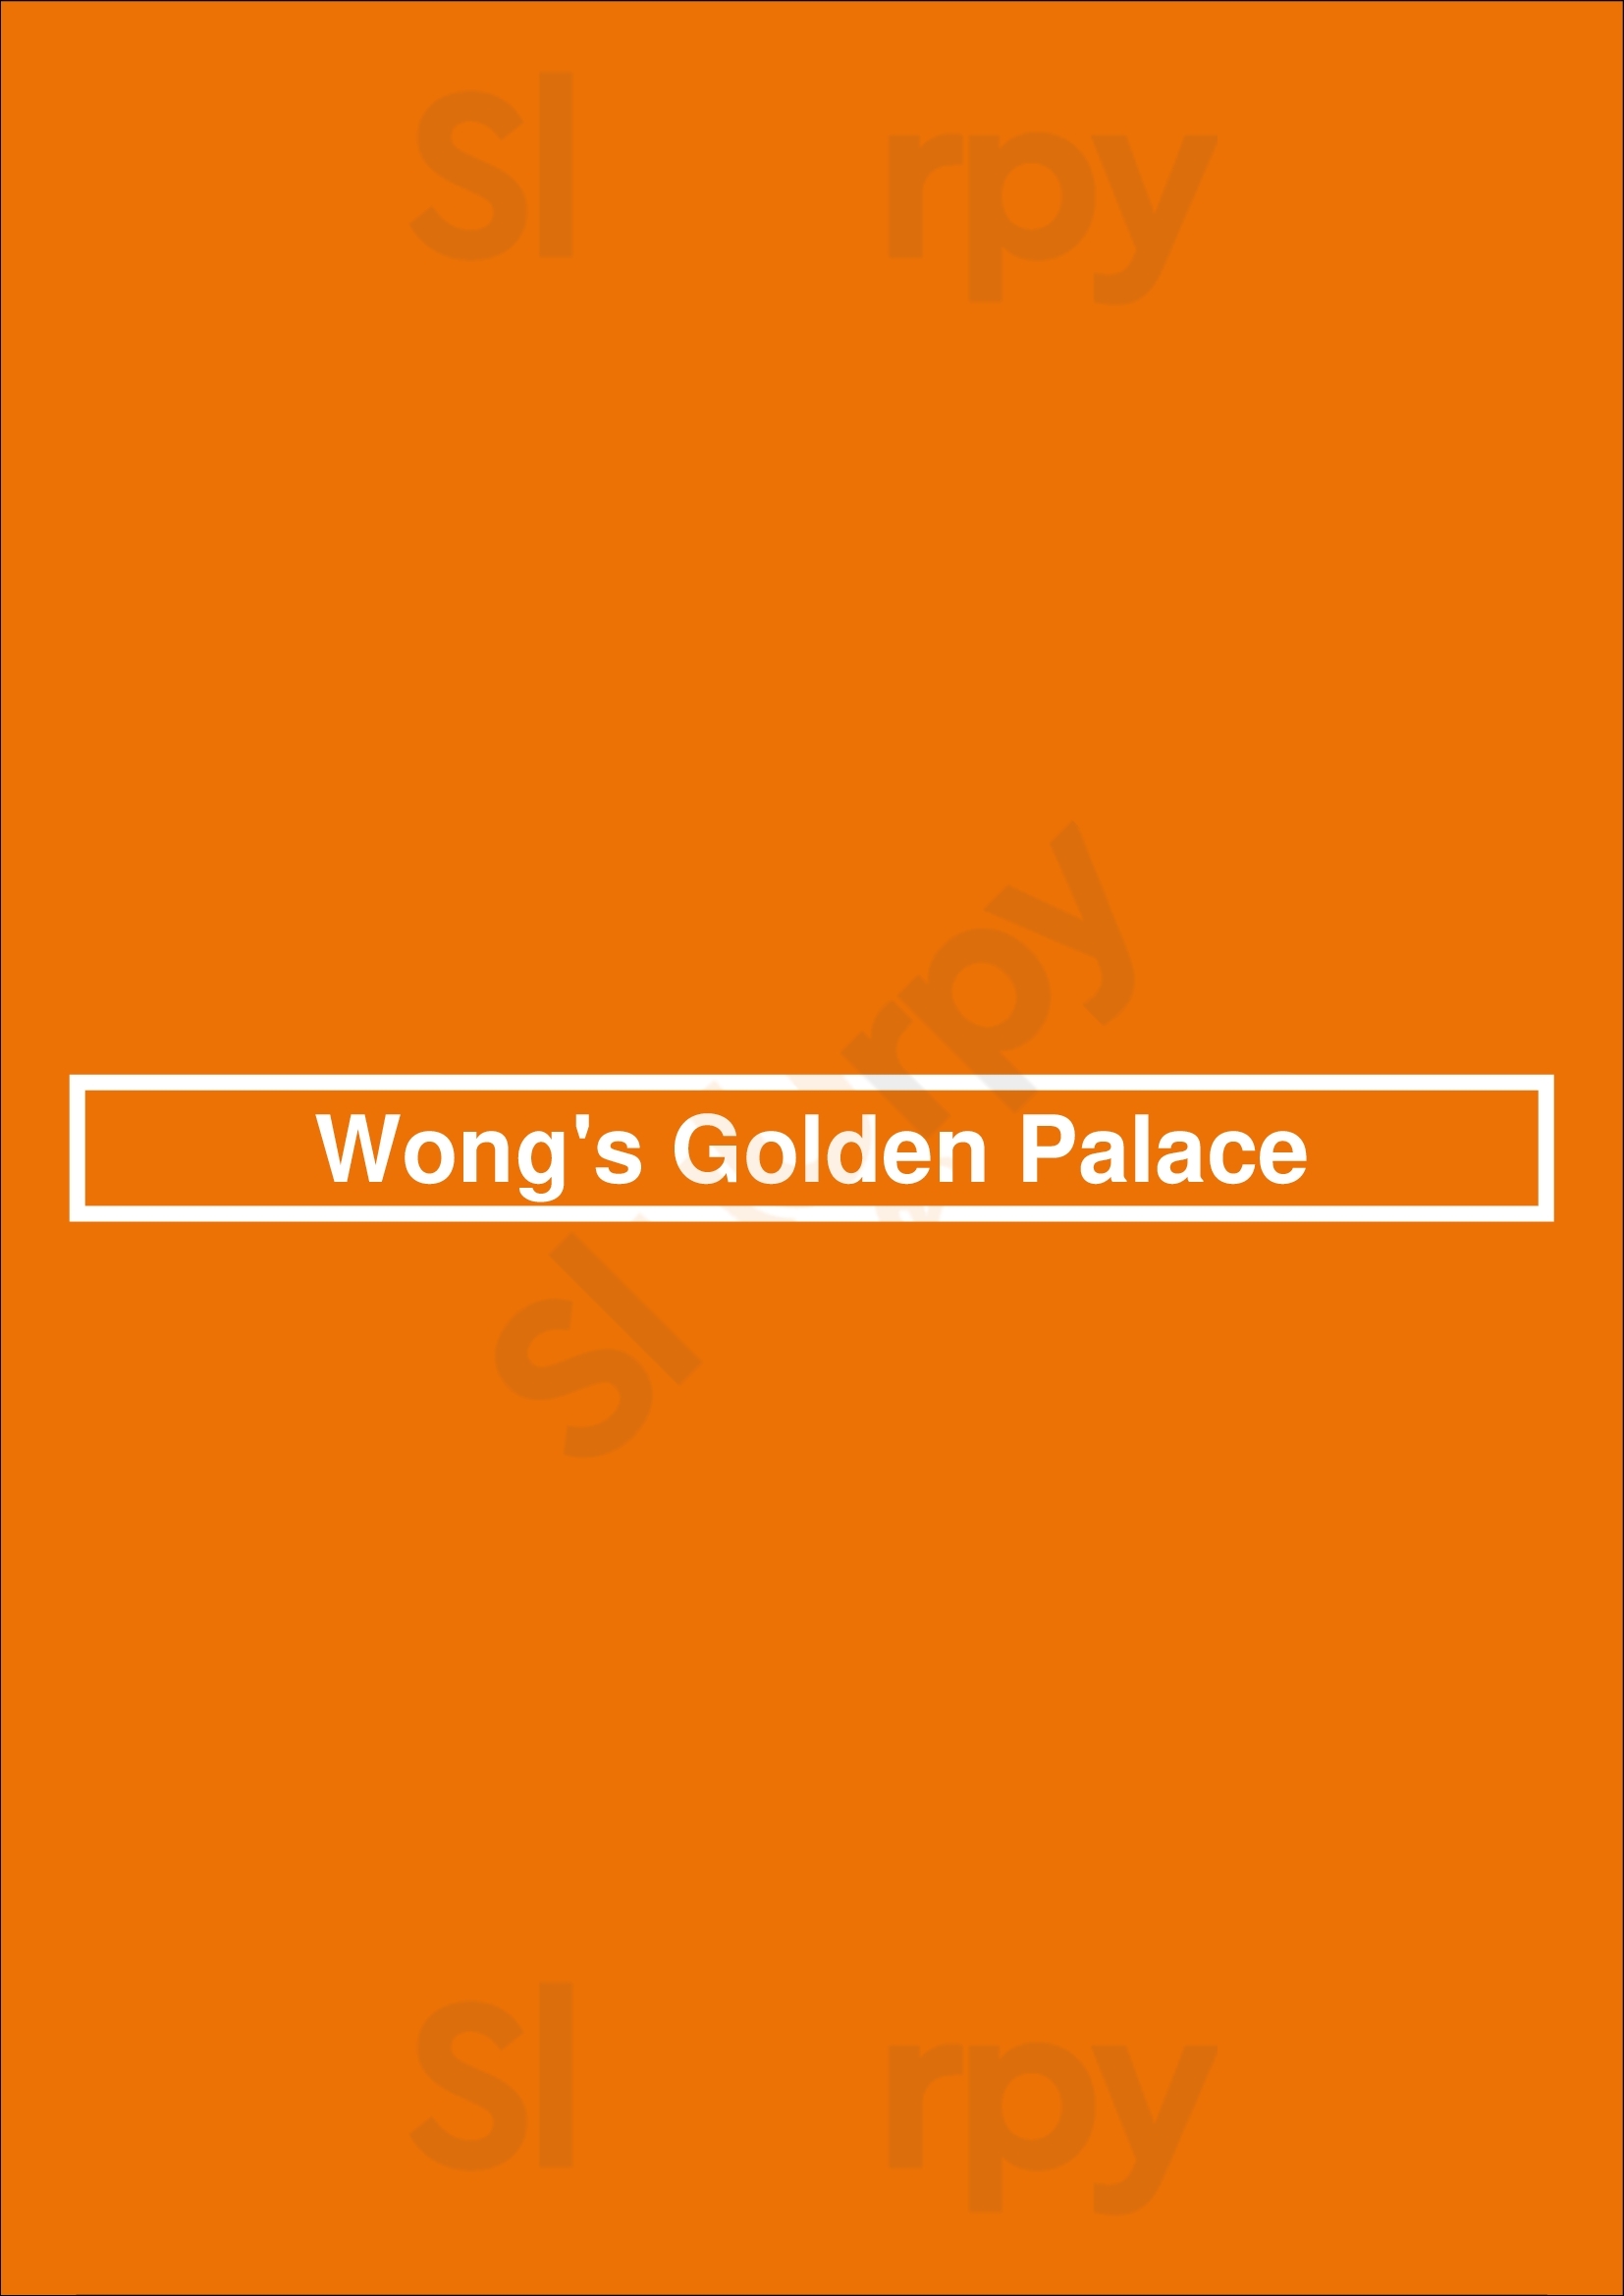 Wong's Golden Palace La Mesa Menu - 1